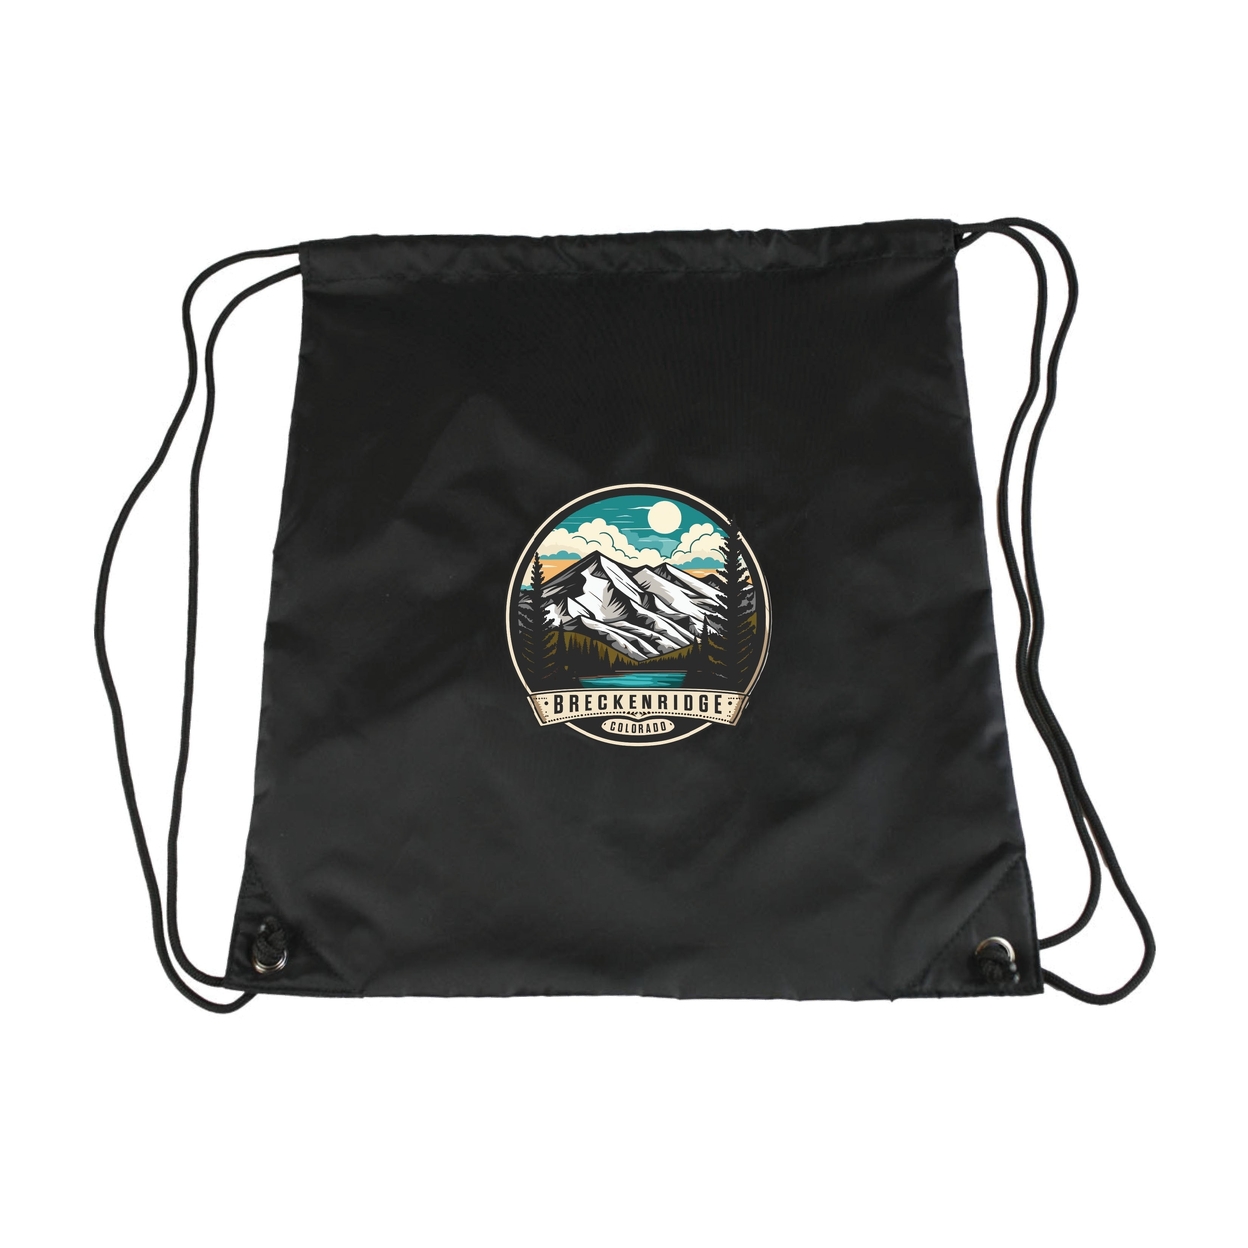 Breckenridge Colorado Design A Souvenir Cinch Bag With Drawstring Backpack Black - Black